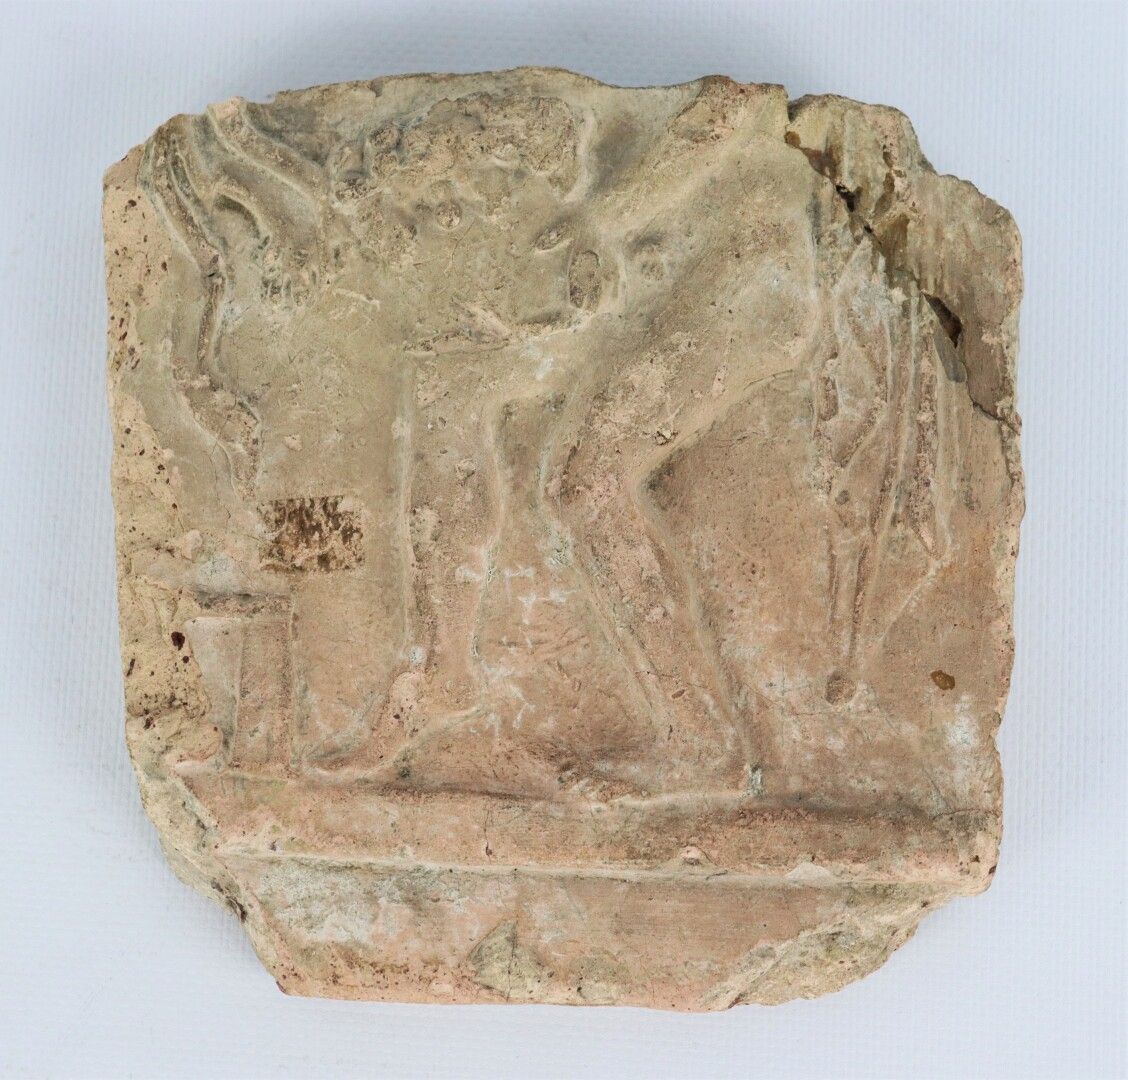 Null 伊特鲁里亚人的殡葬瓮的碎片。

高_15.8厘米，宽_15.8厘米